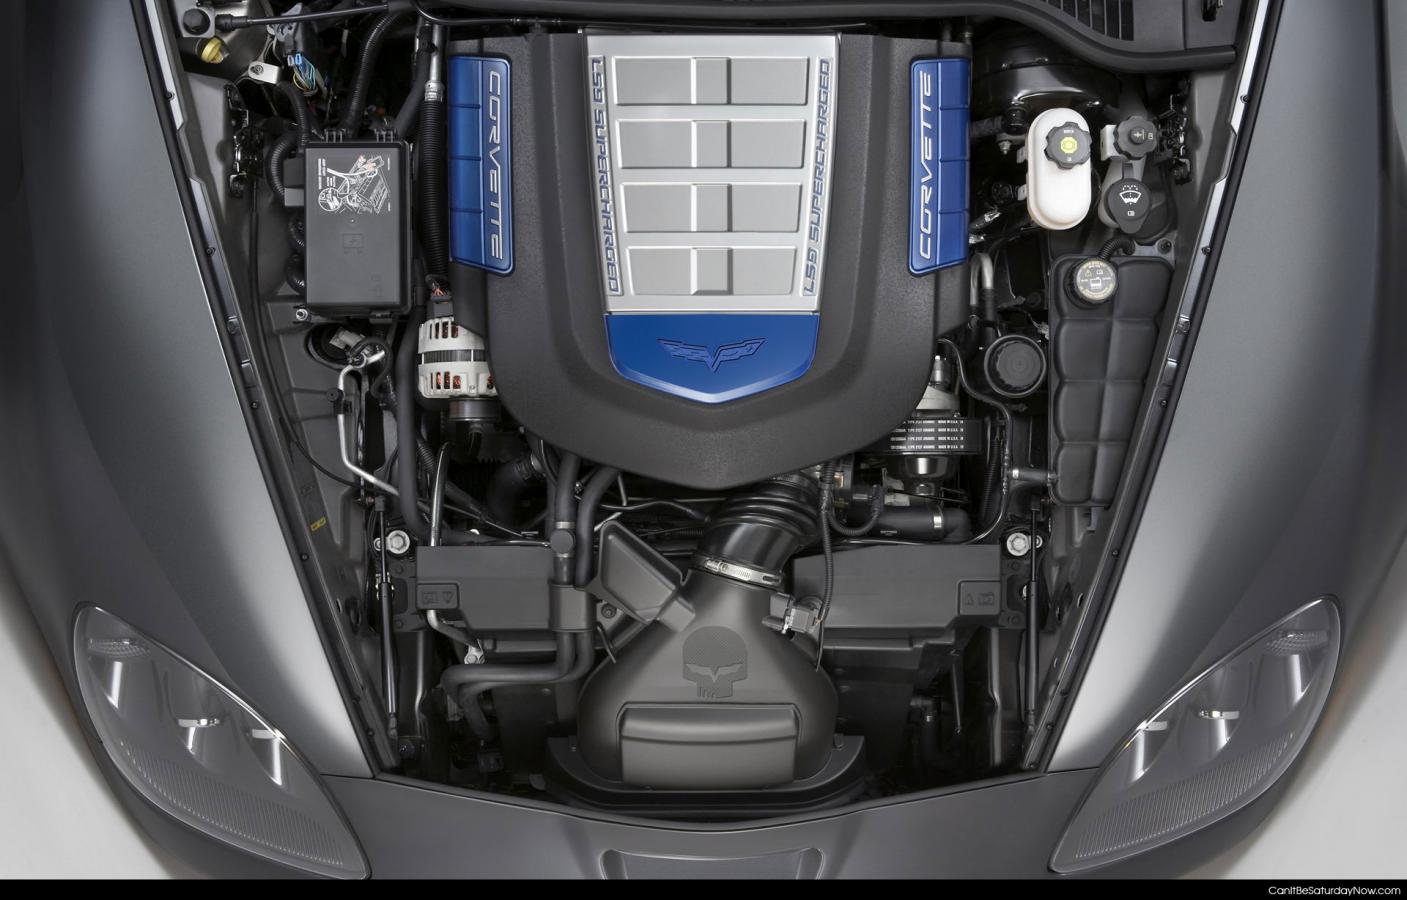 Corvette engine - Brand new clean Corvette engine